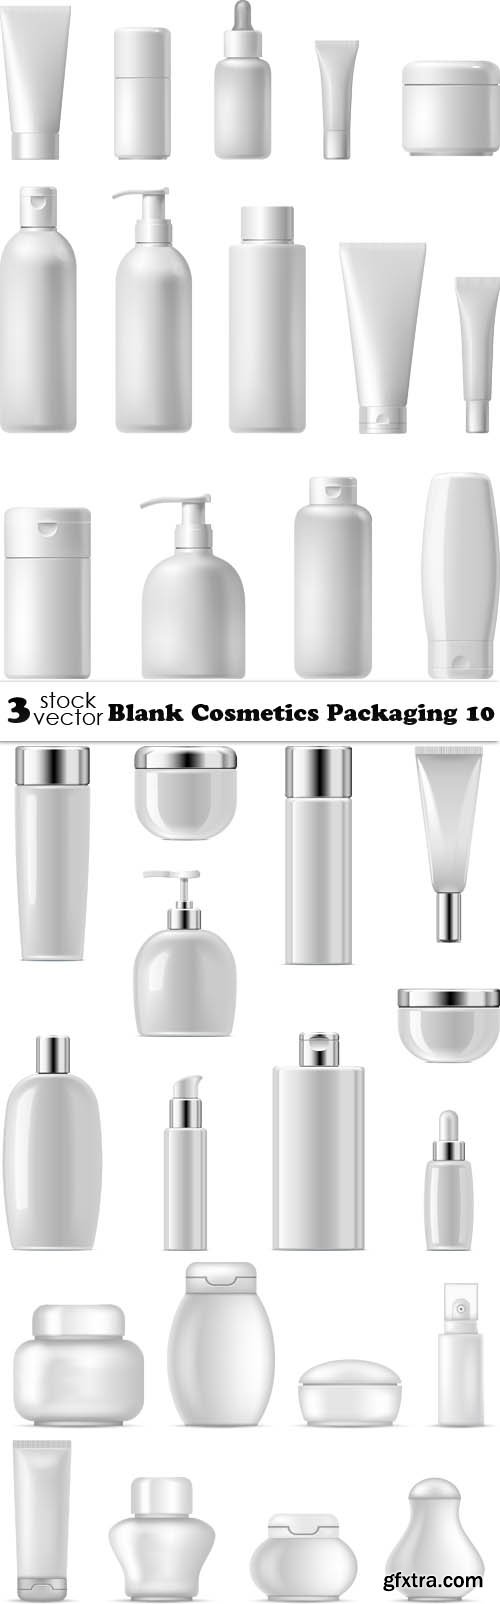 Vectors - Blank Cosmetics Packaging 10